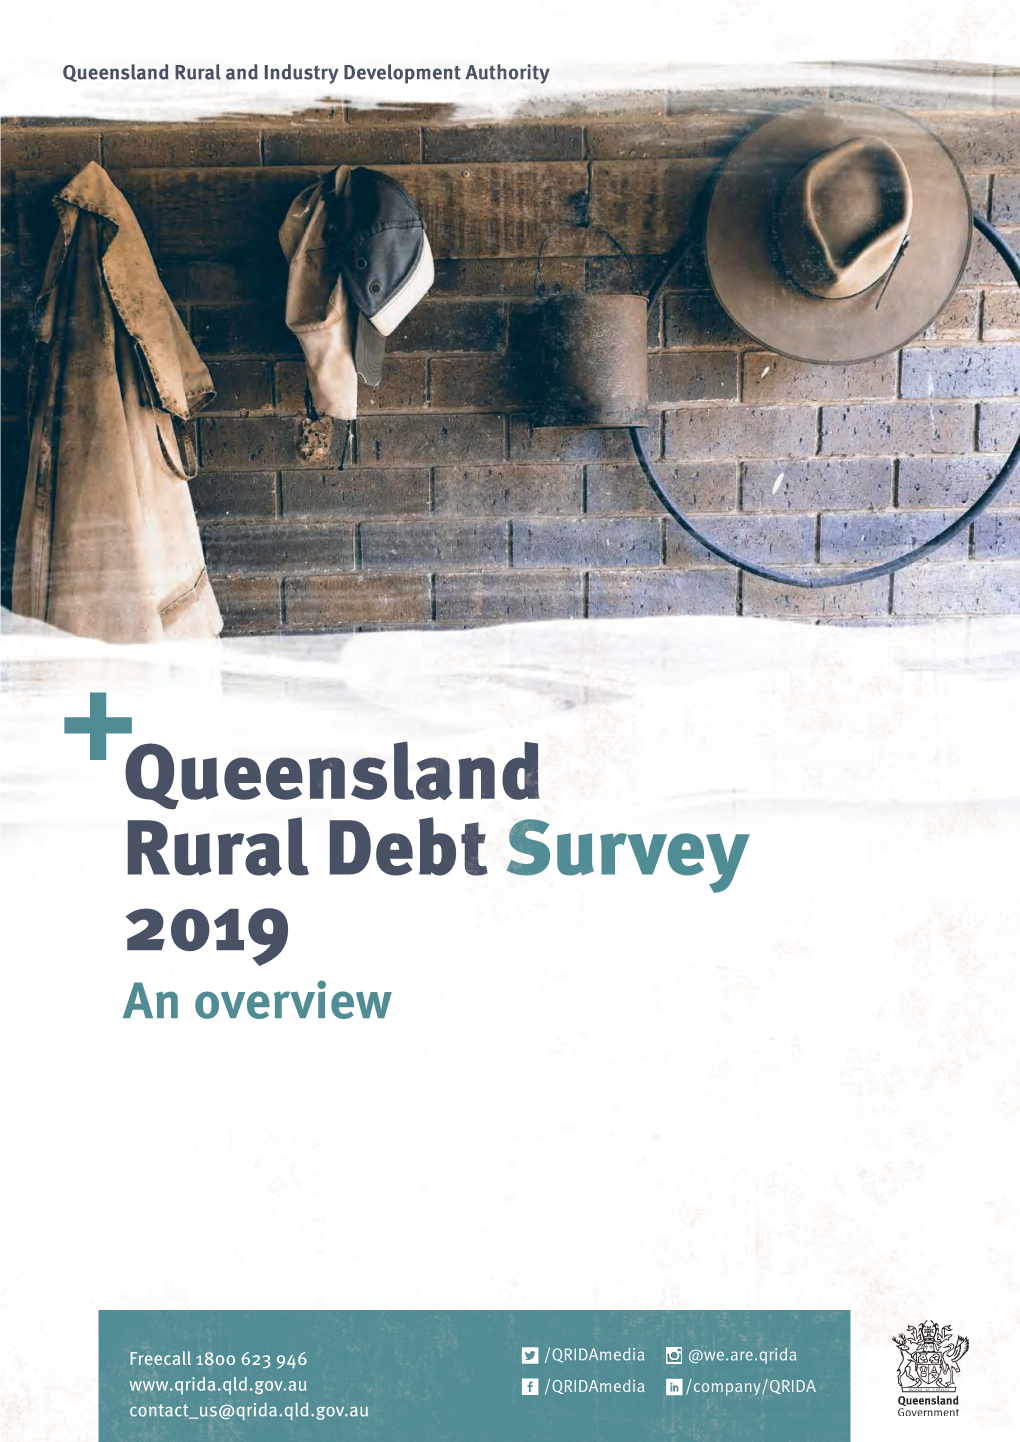 Rural Debt Survey Overview 2019